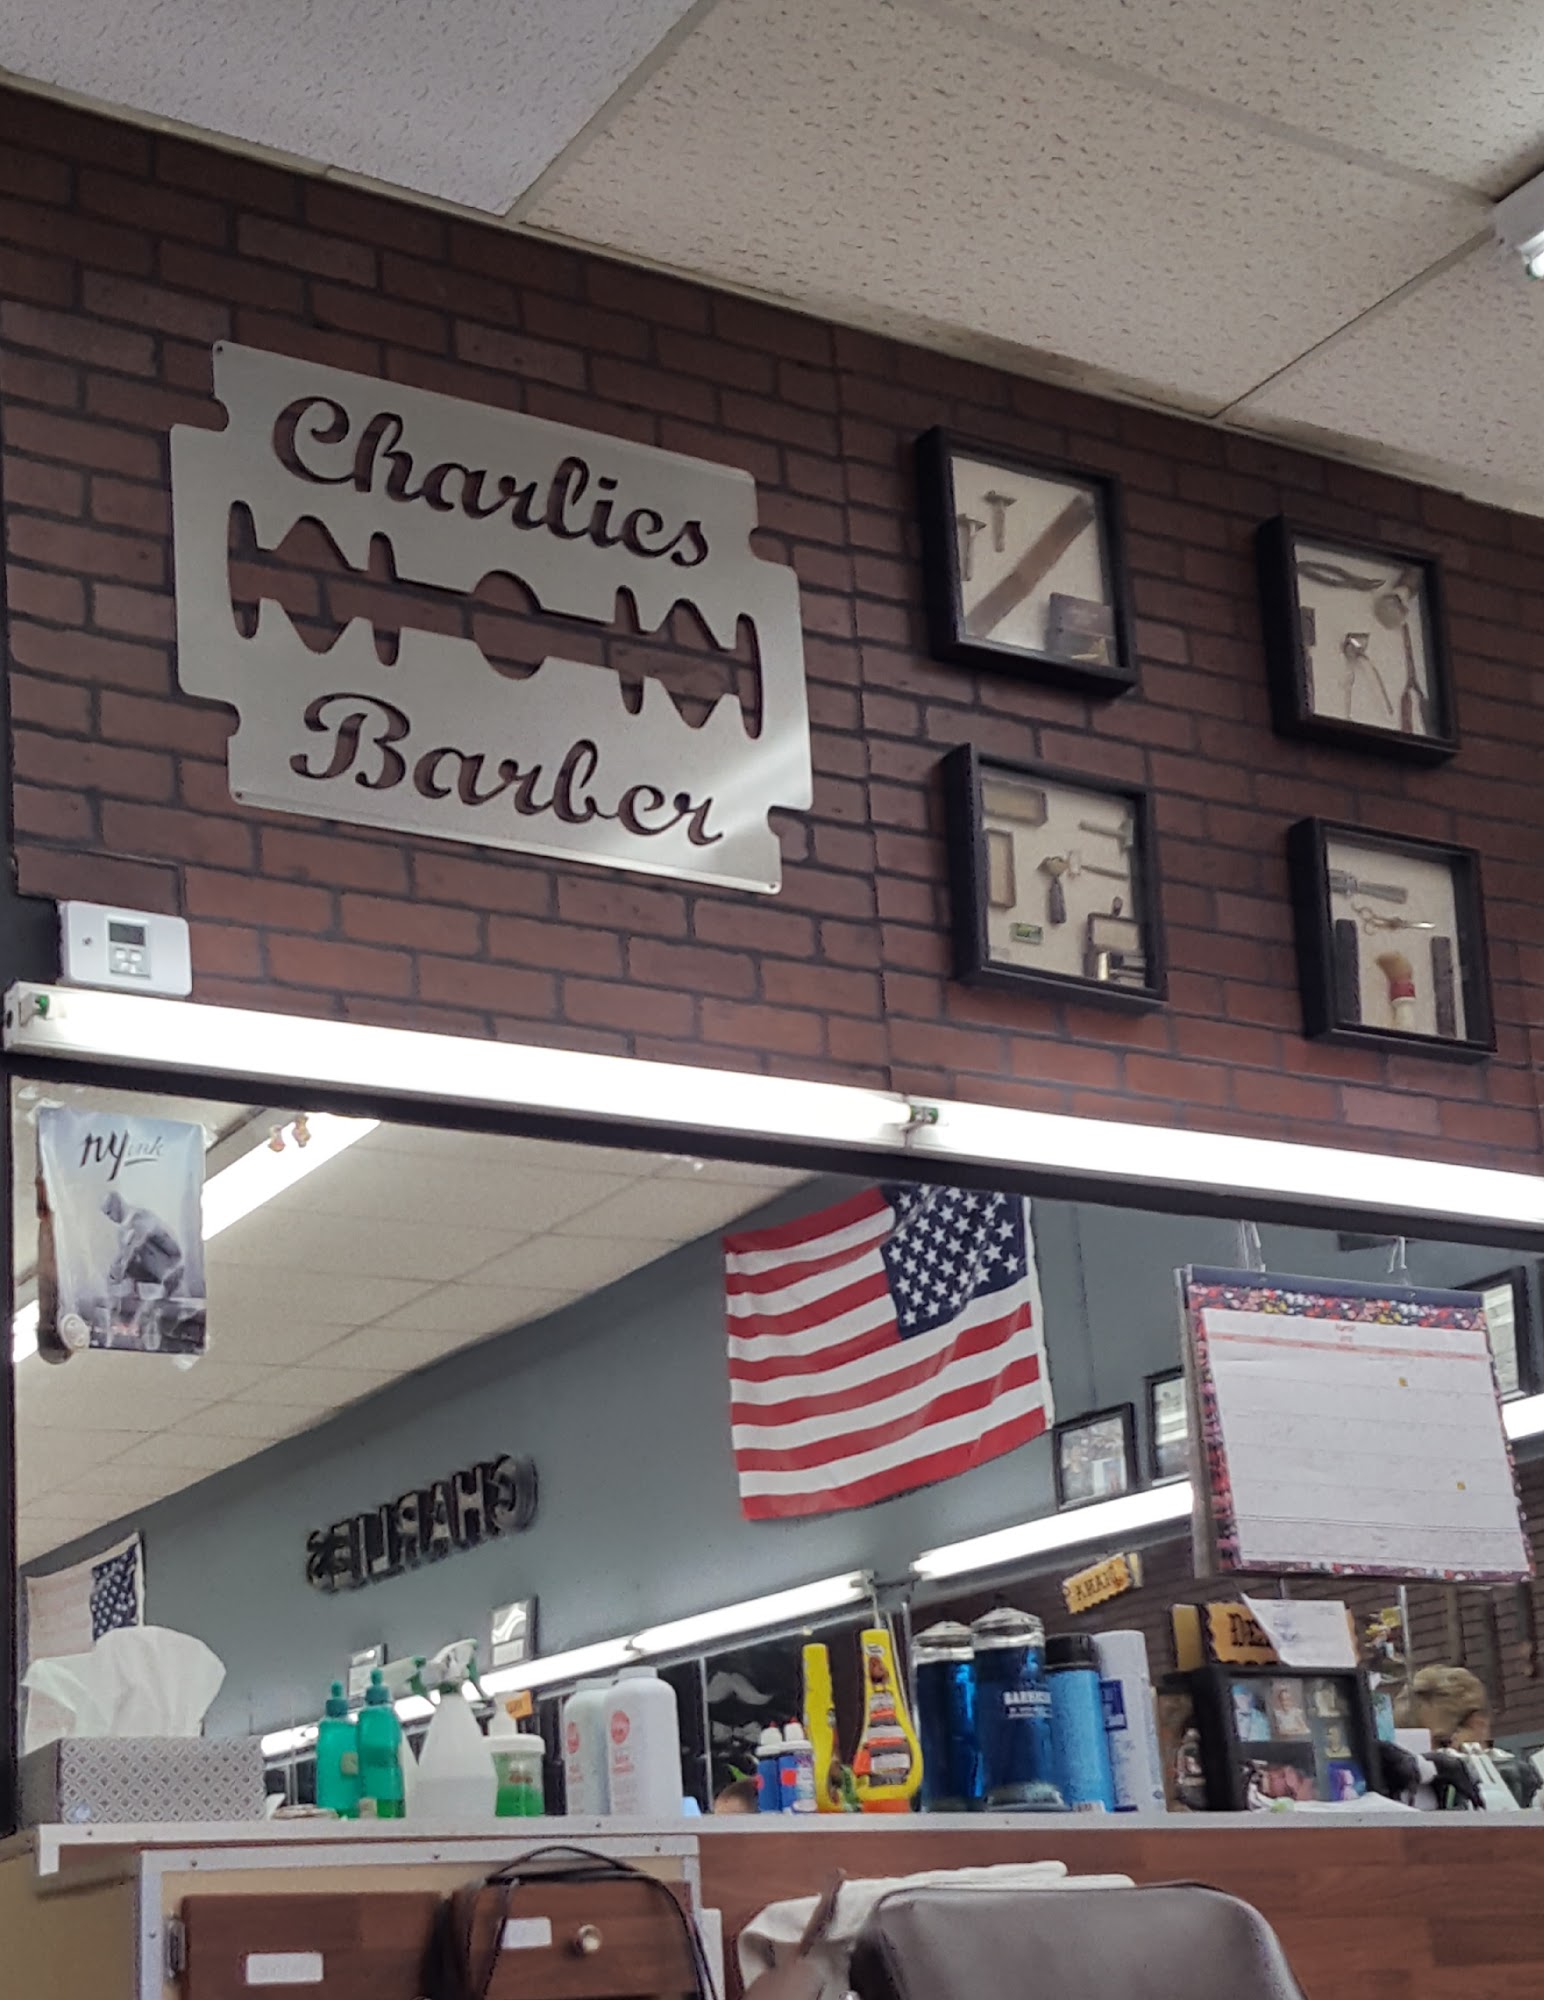 Charlie's Barbers